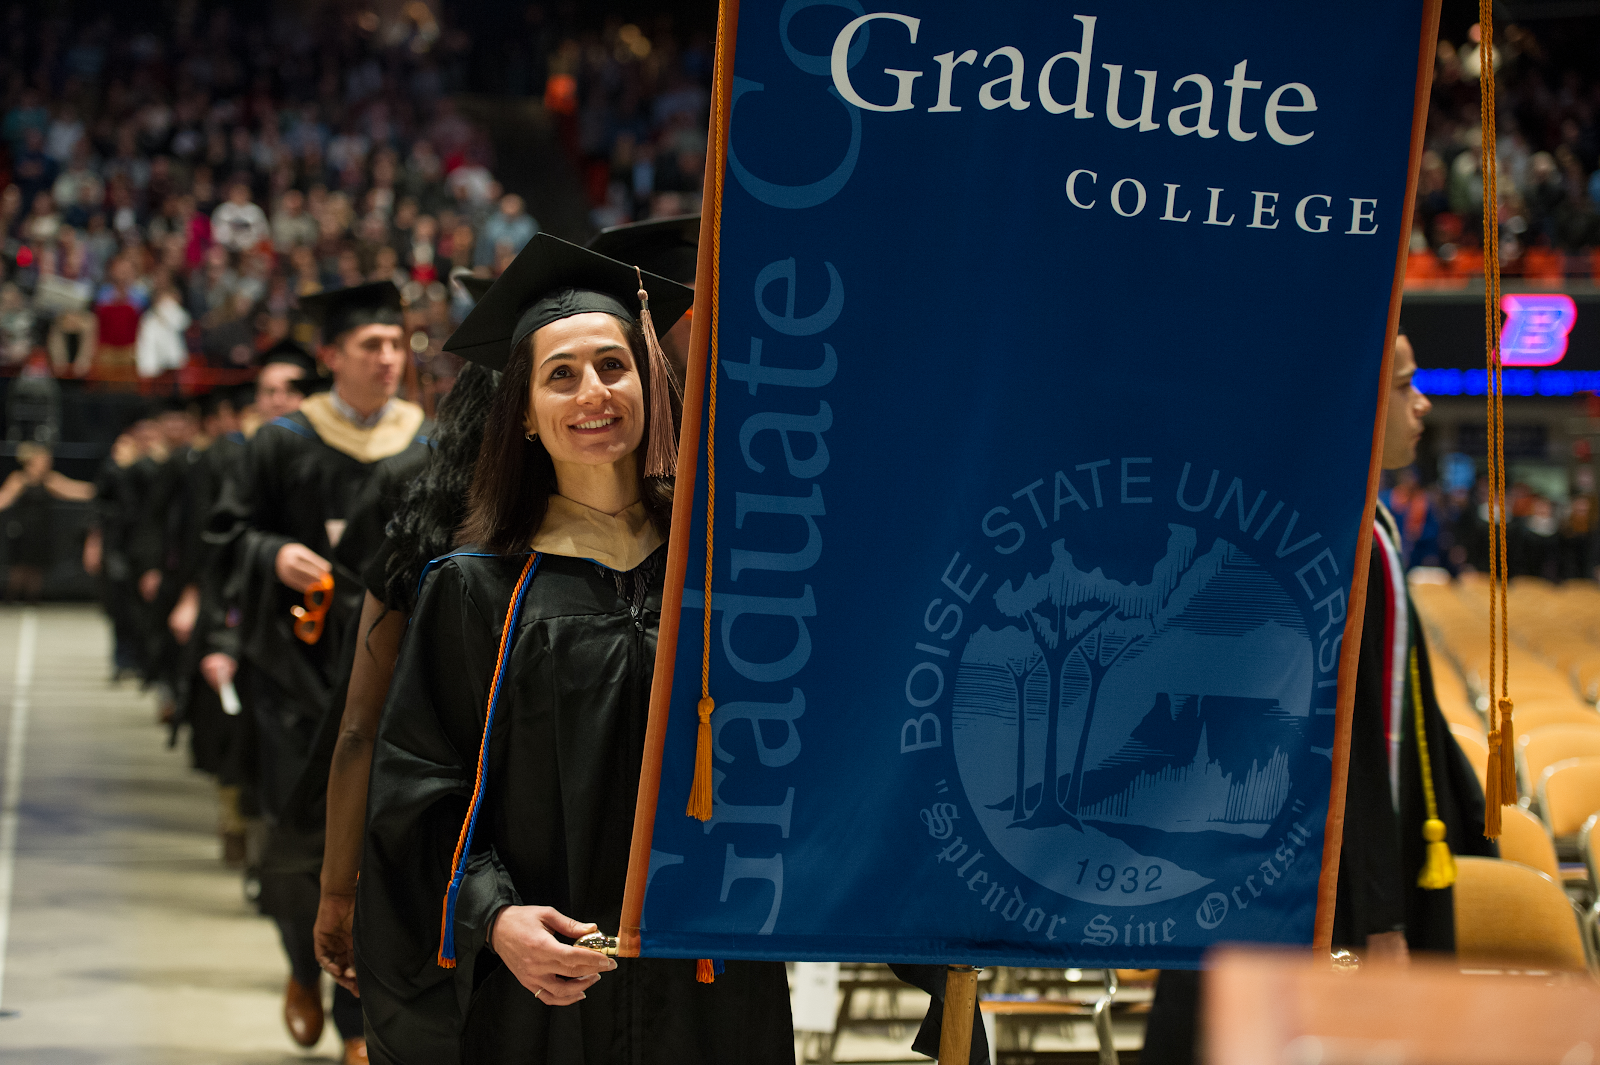 Karolin Marakool carries the Graduate college banner at Graduation